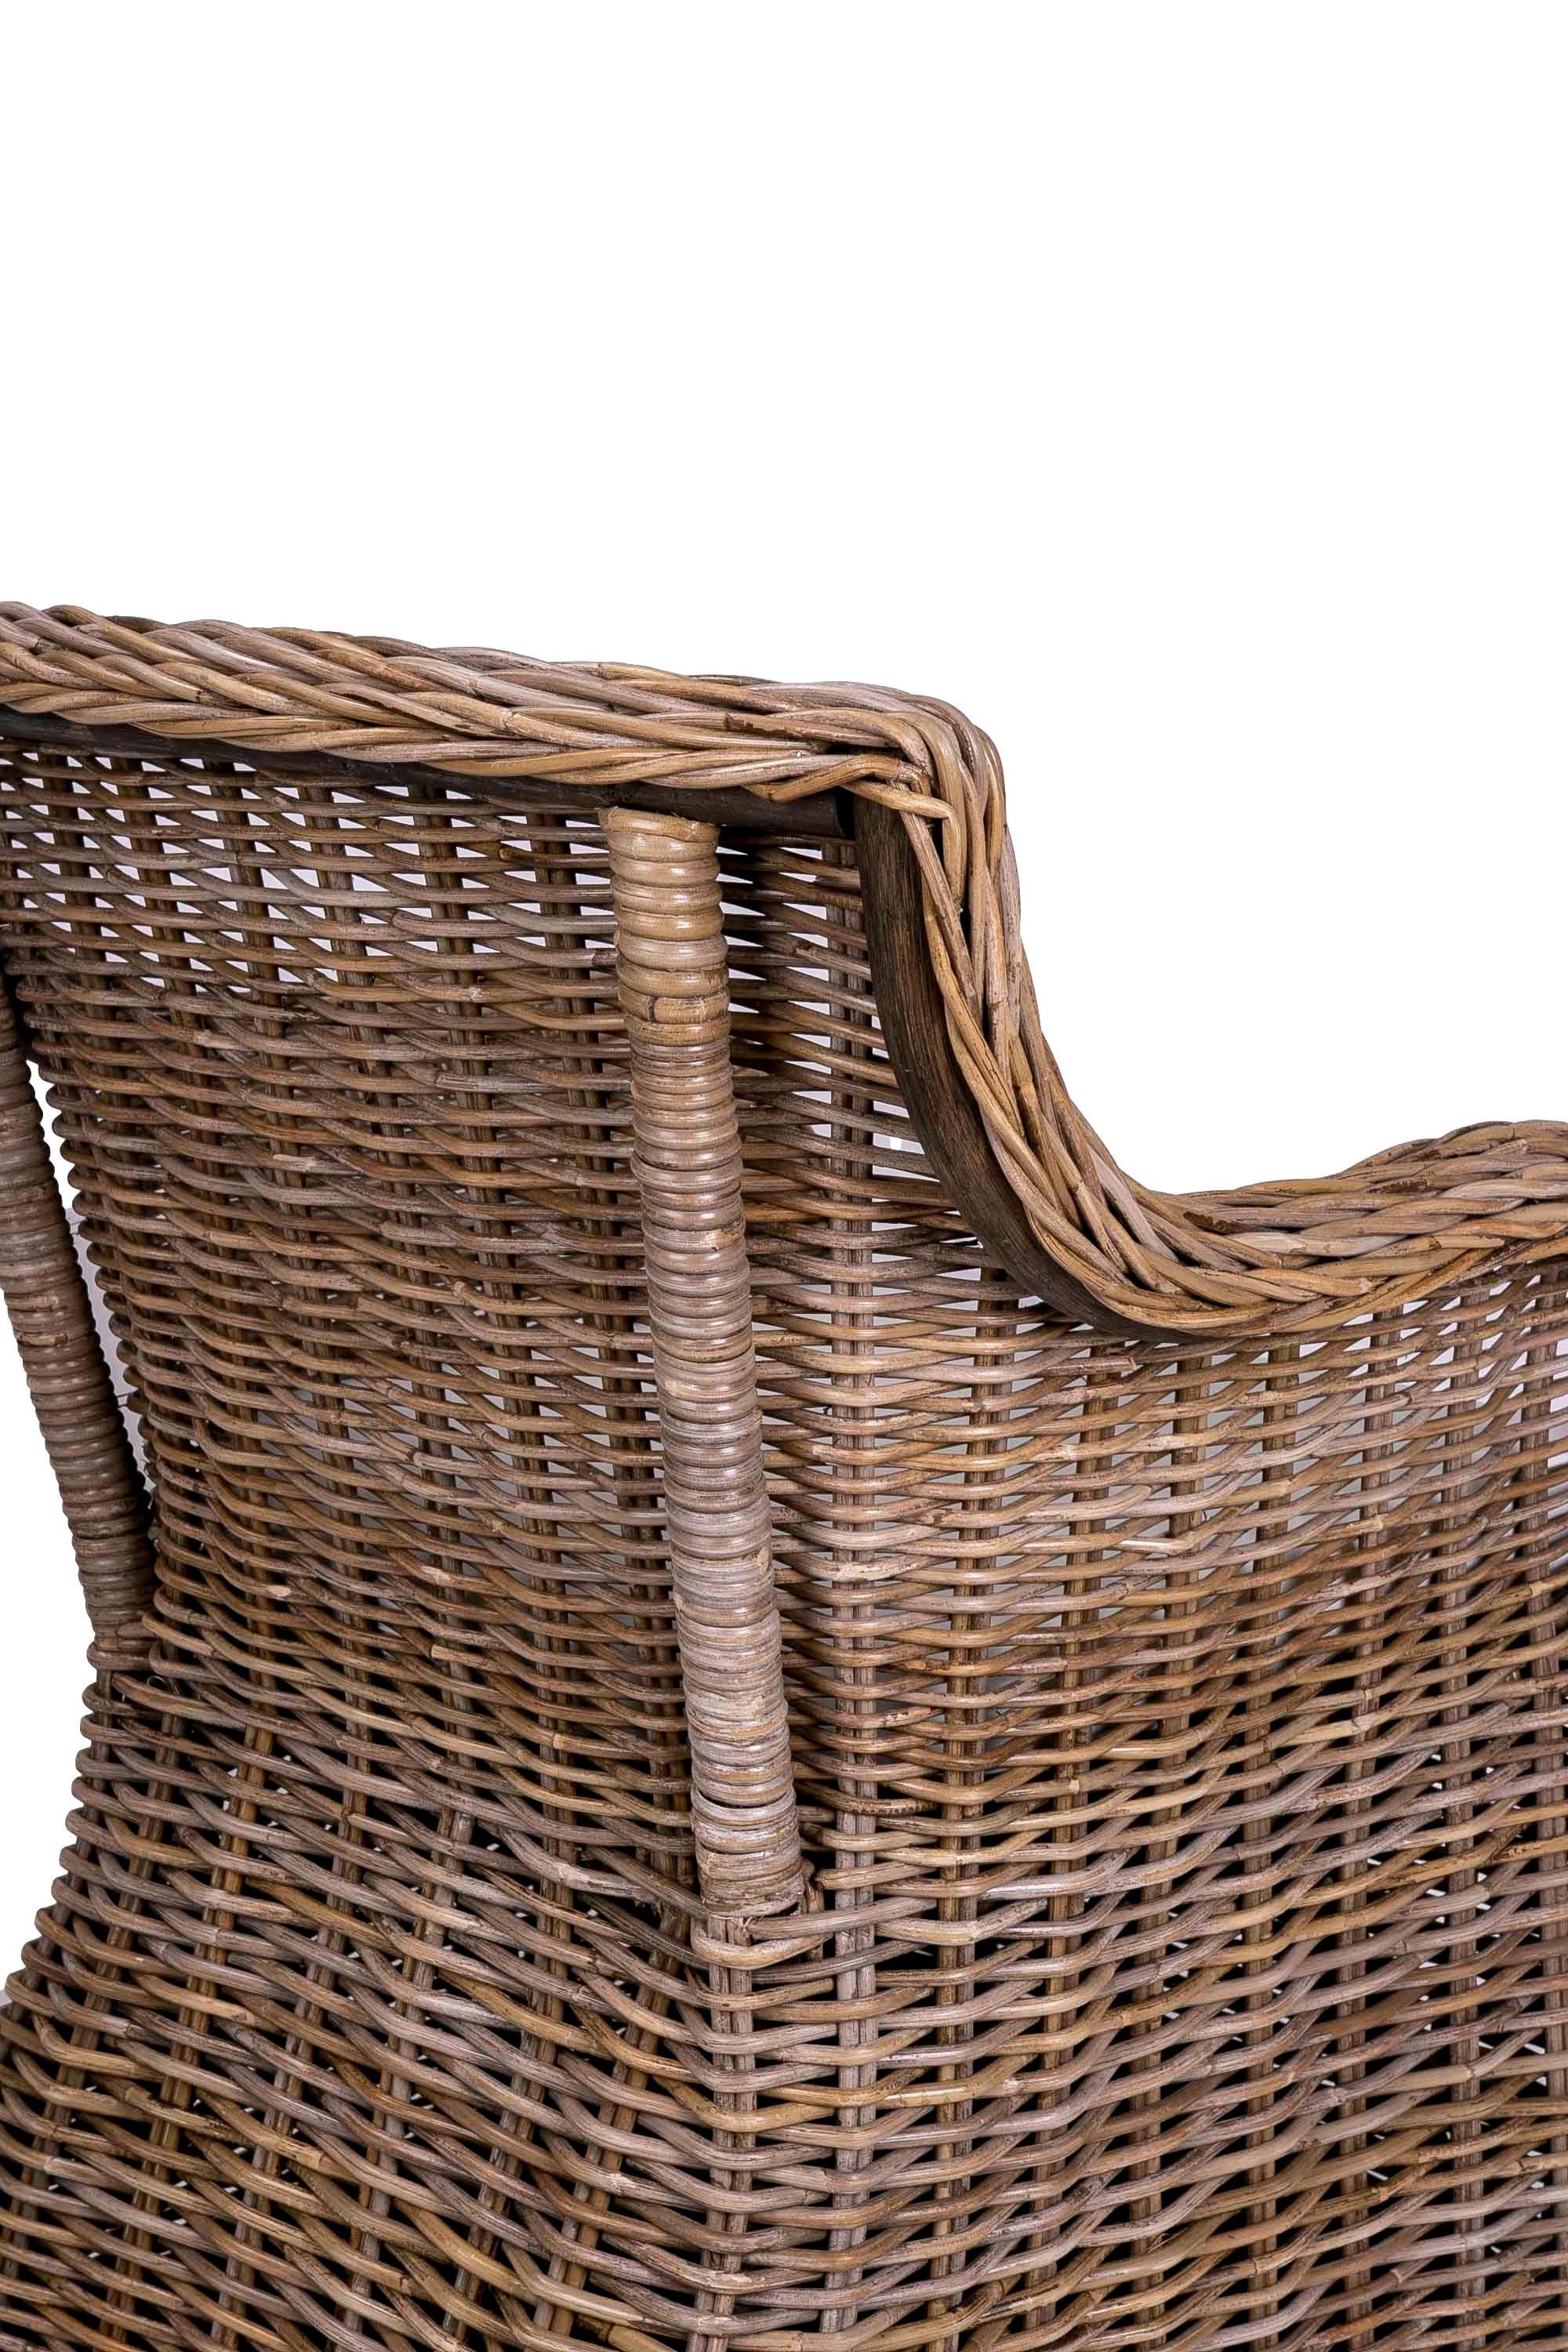  Rattan Garden Chair with Cushion in Greyish Tone For Sale 7